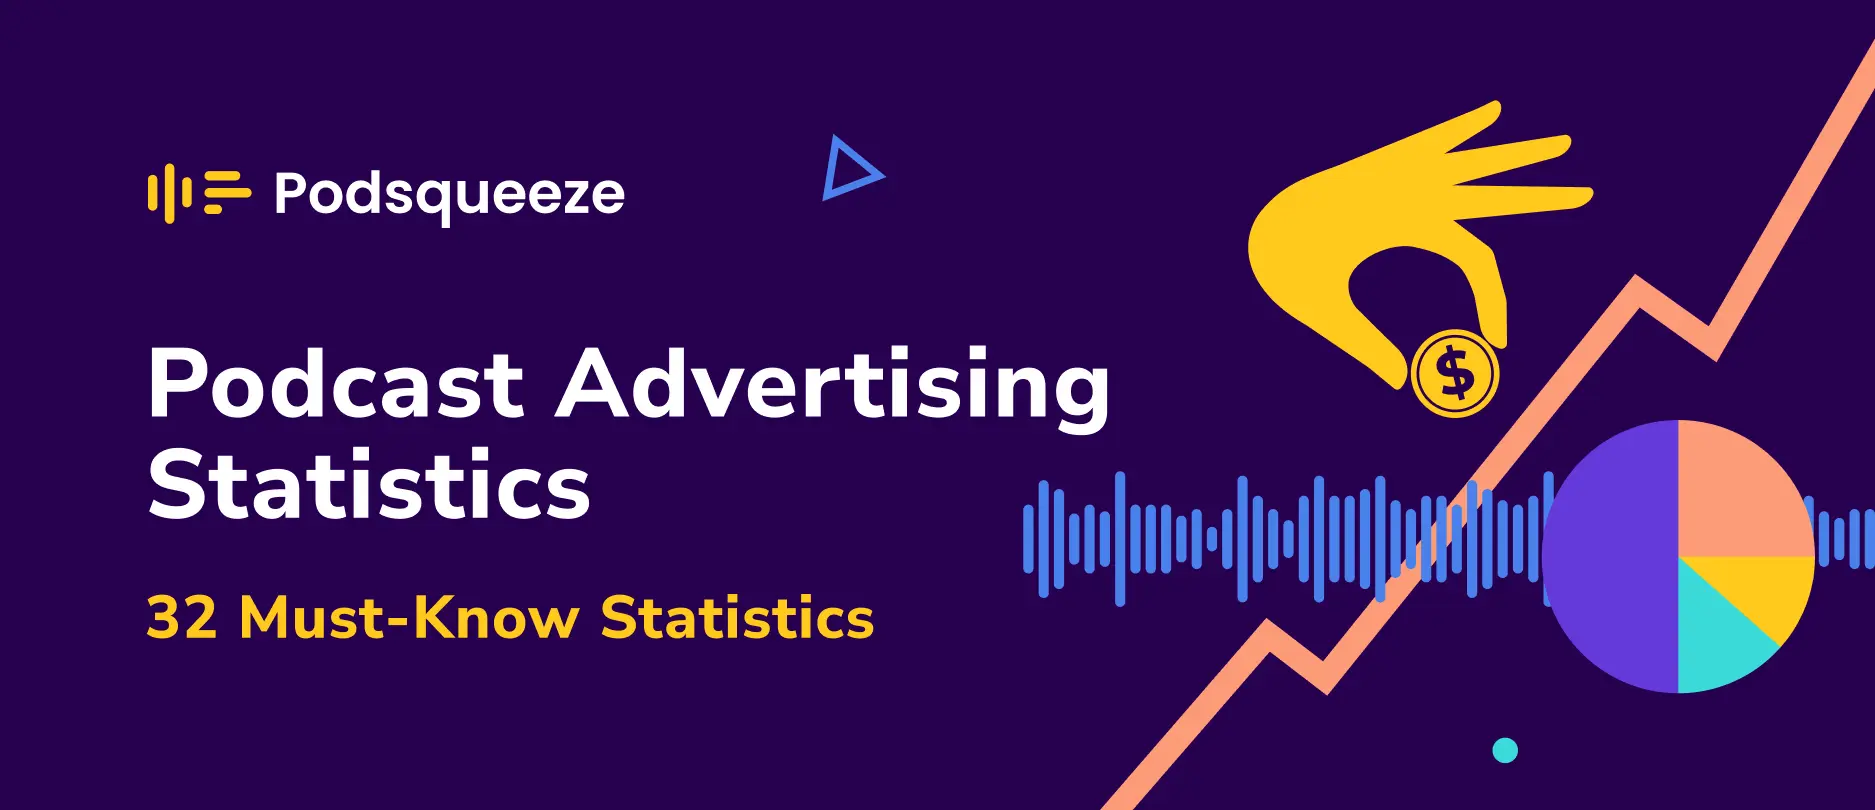 podcast-advertising-statistics